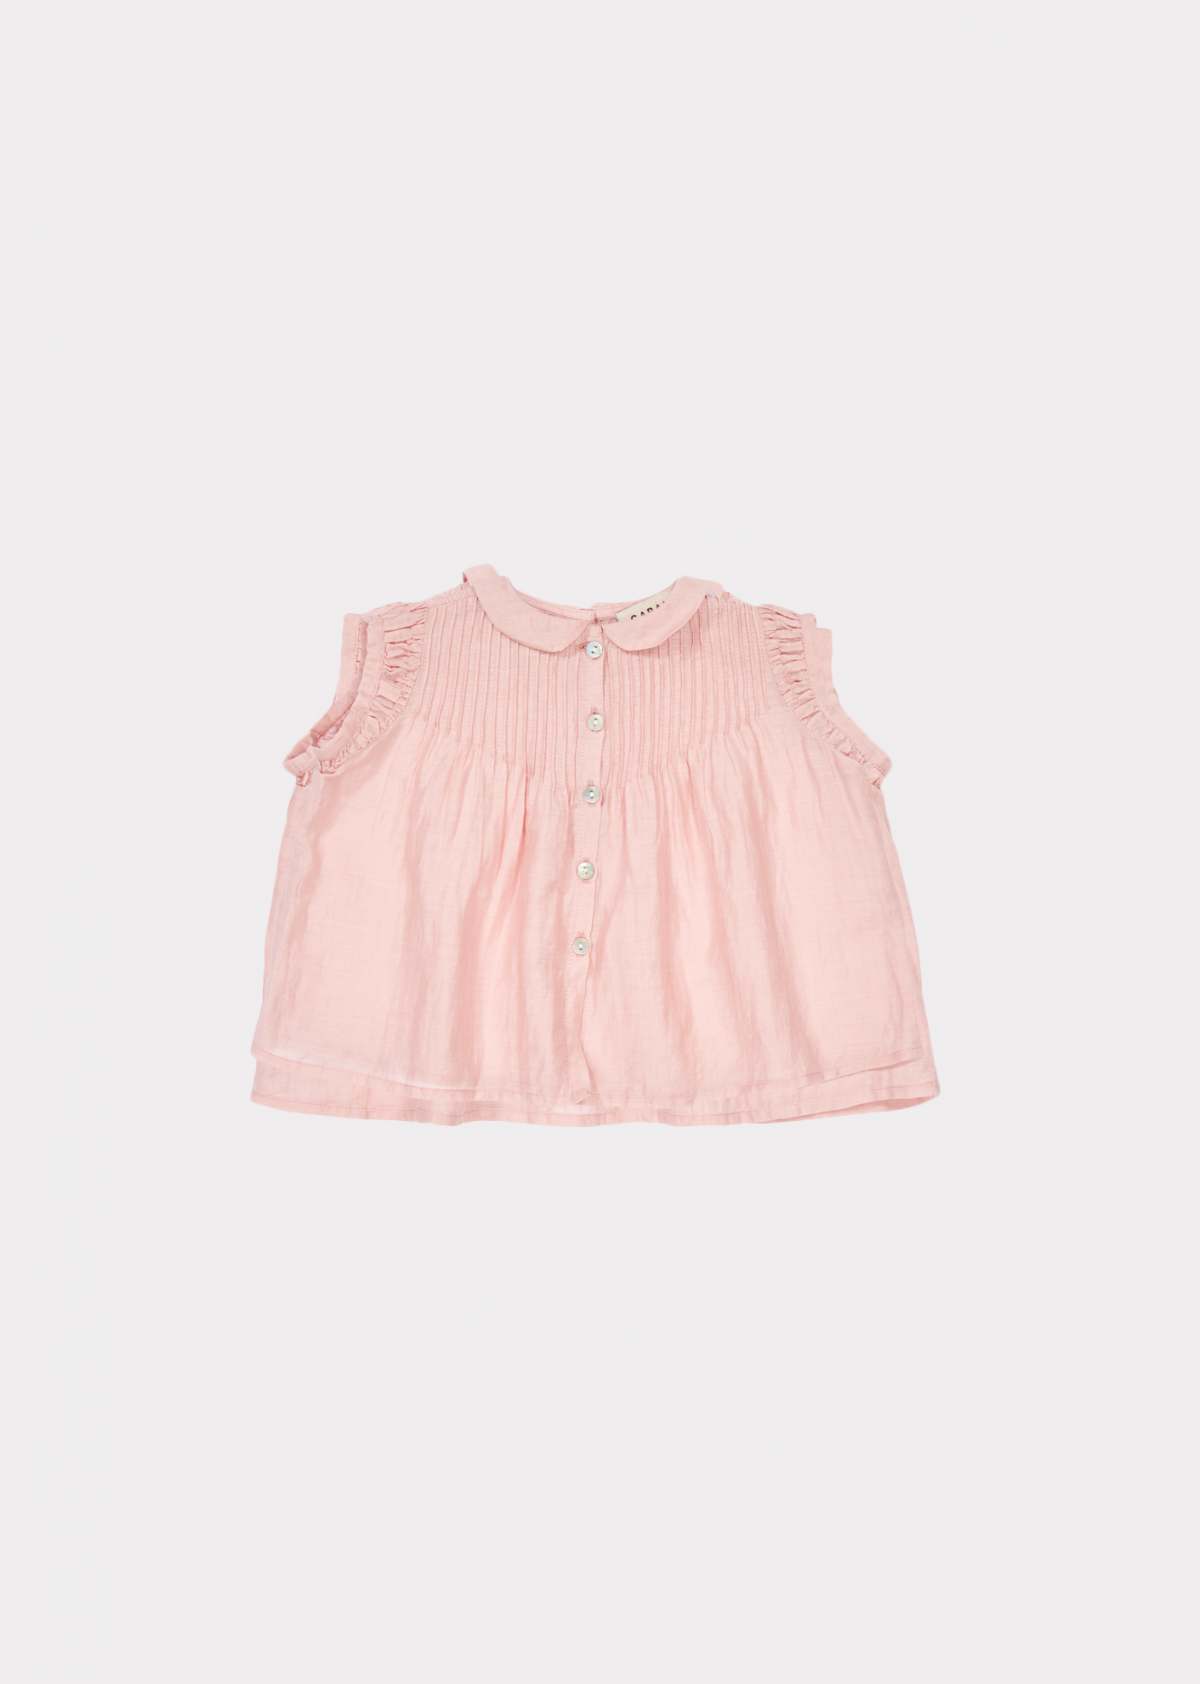 Baby Girls Pink Cotton Top